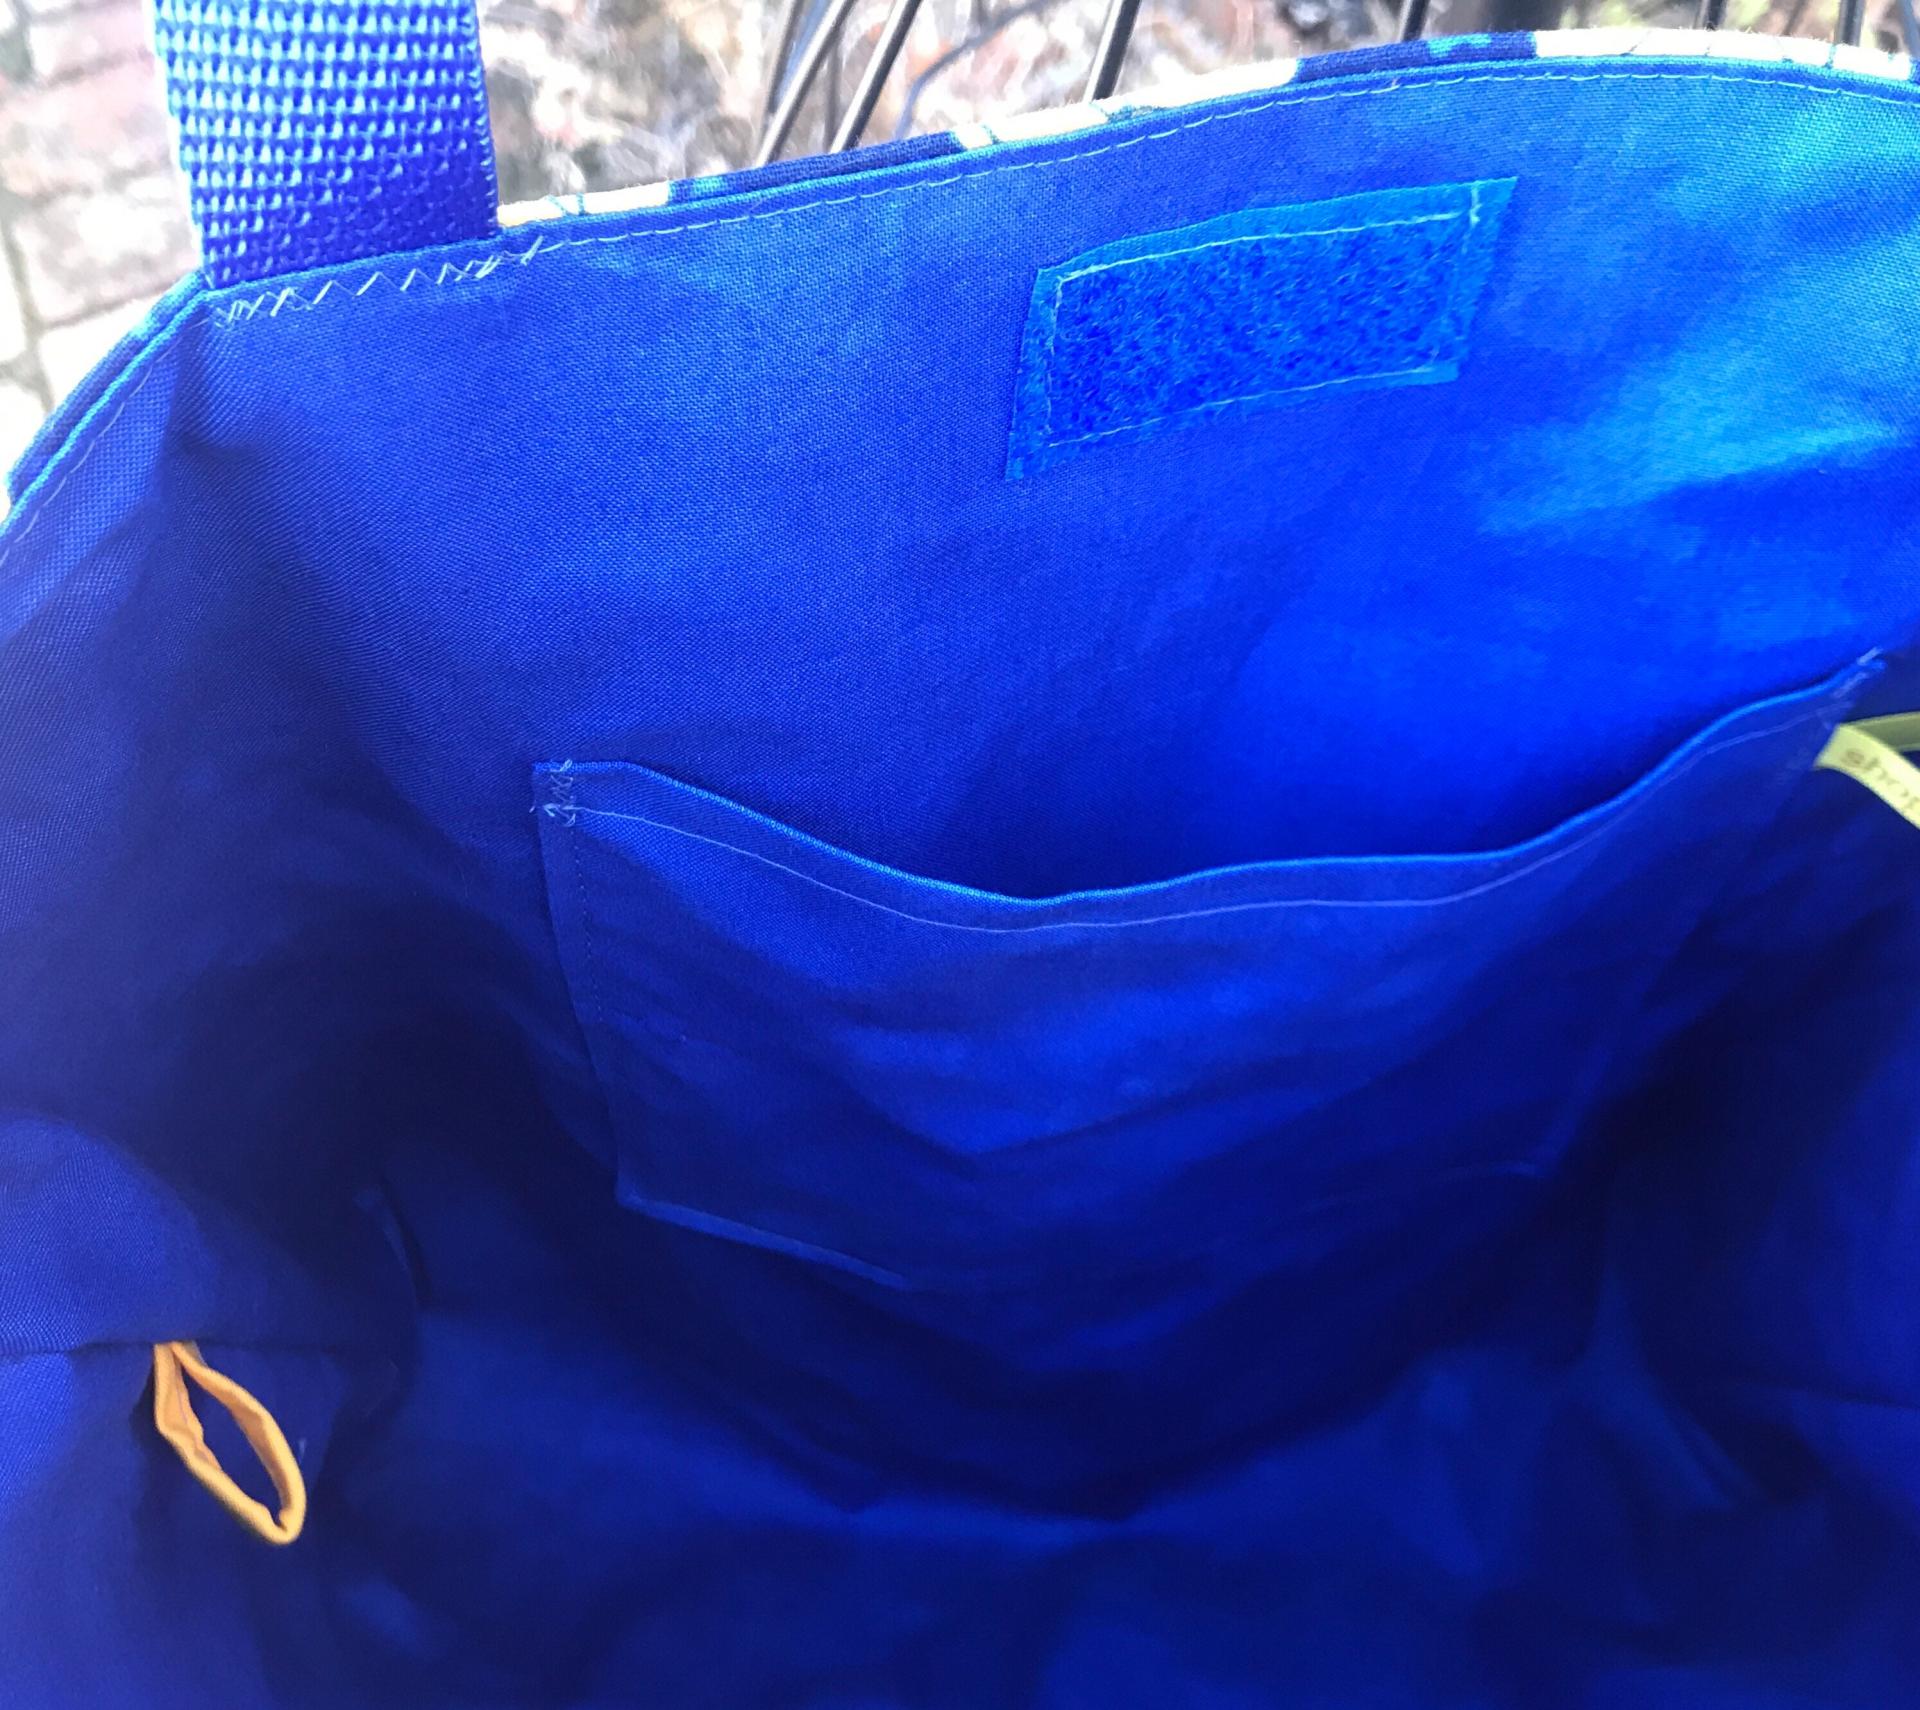 Golden State Warriors tote bag, throwback logo, vinyl bottom, one pocket, hook & loop, shopping market errand bag, GSW basketball, handmade